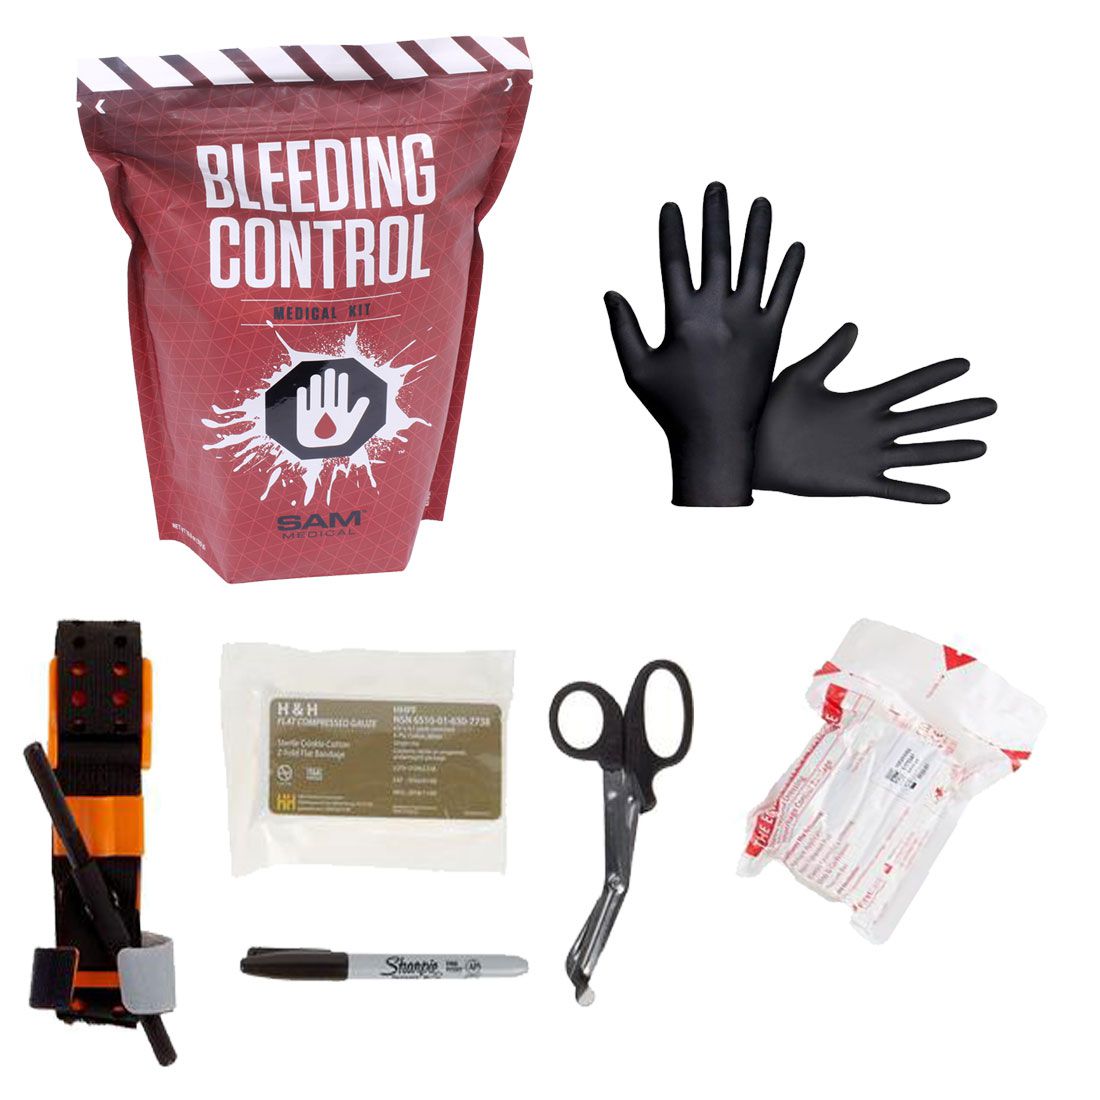 Stop bleeding with the SAMS Bleeding Control Kit